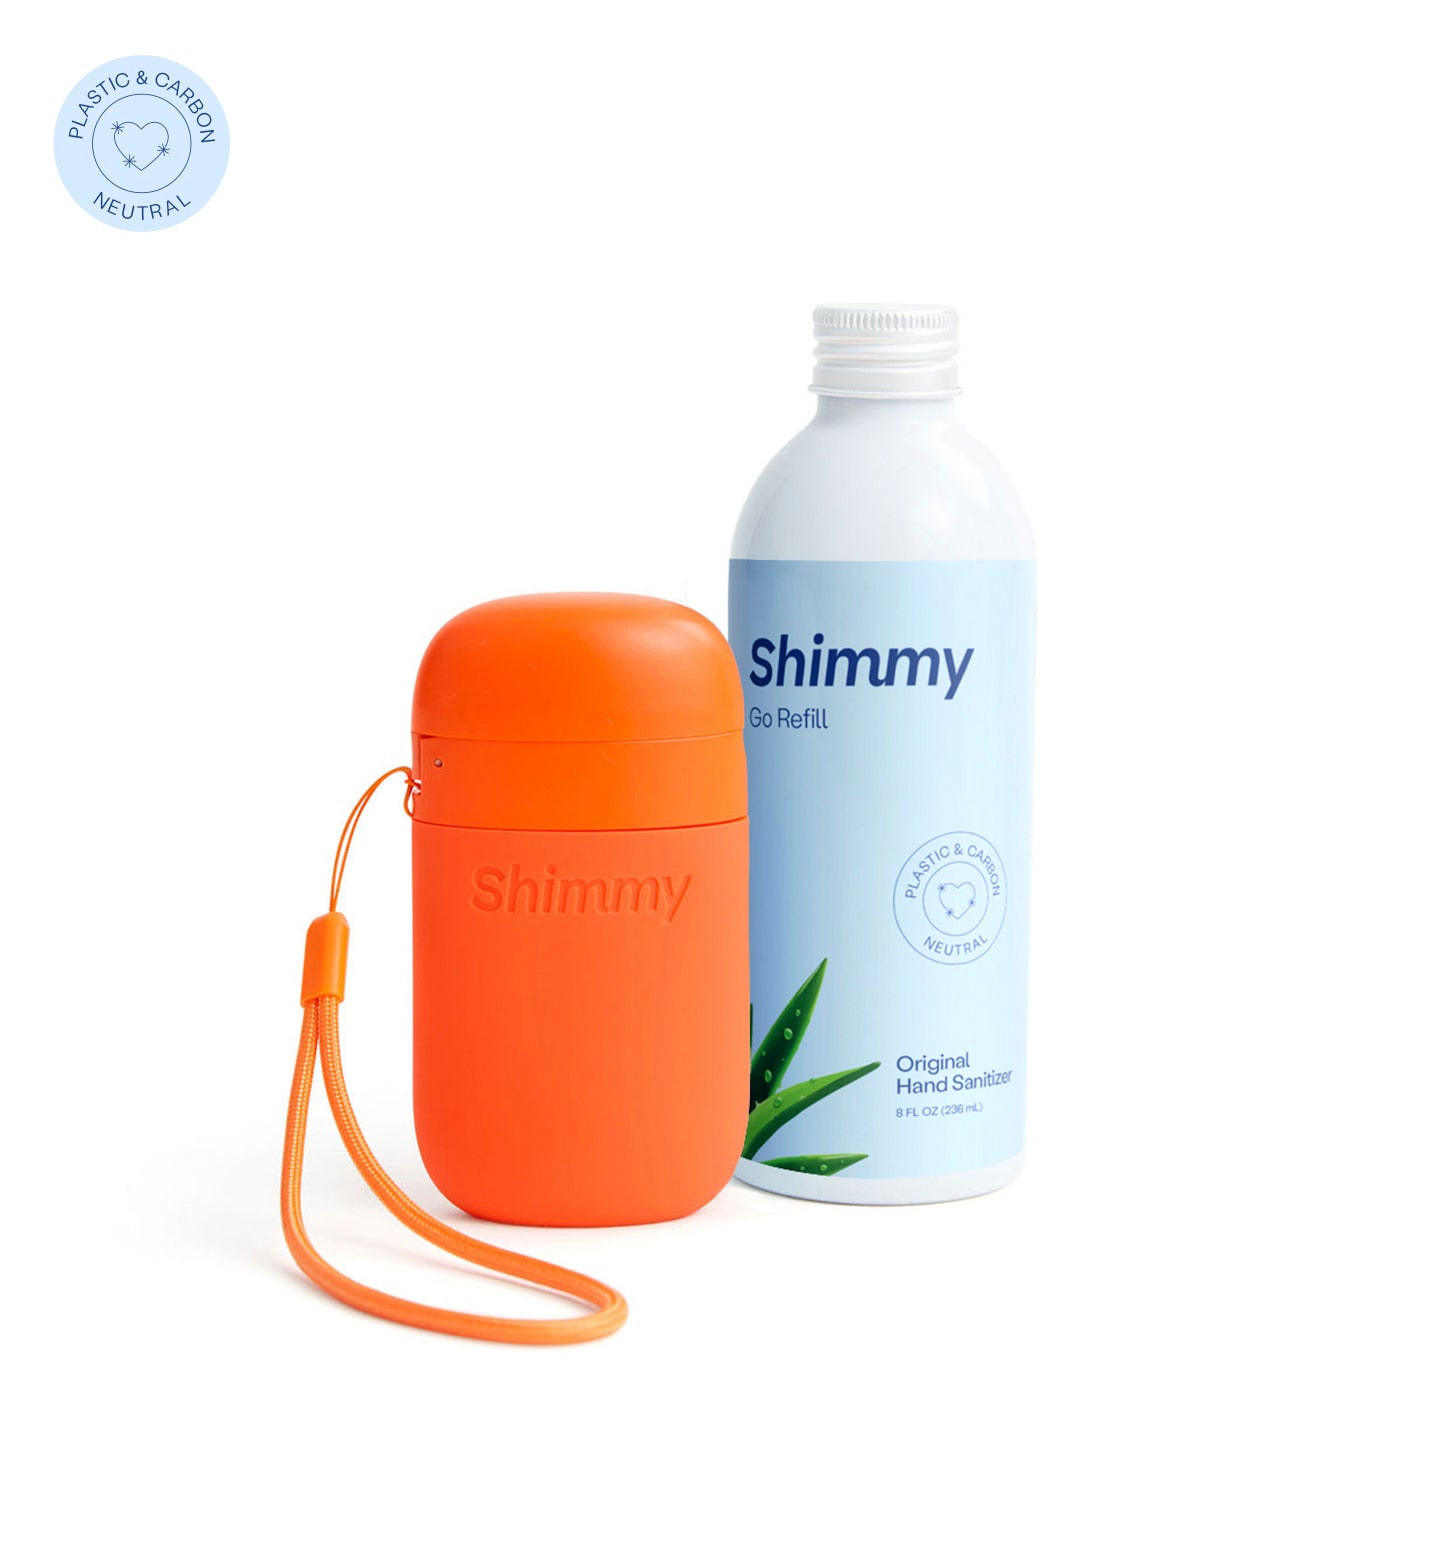 Shimmy Go Portable Hand Sanitizer Dispenser Sunset Red + Original Hand Sanitizer [40734759682239] - 